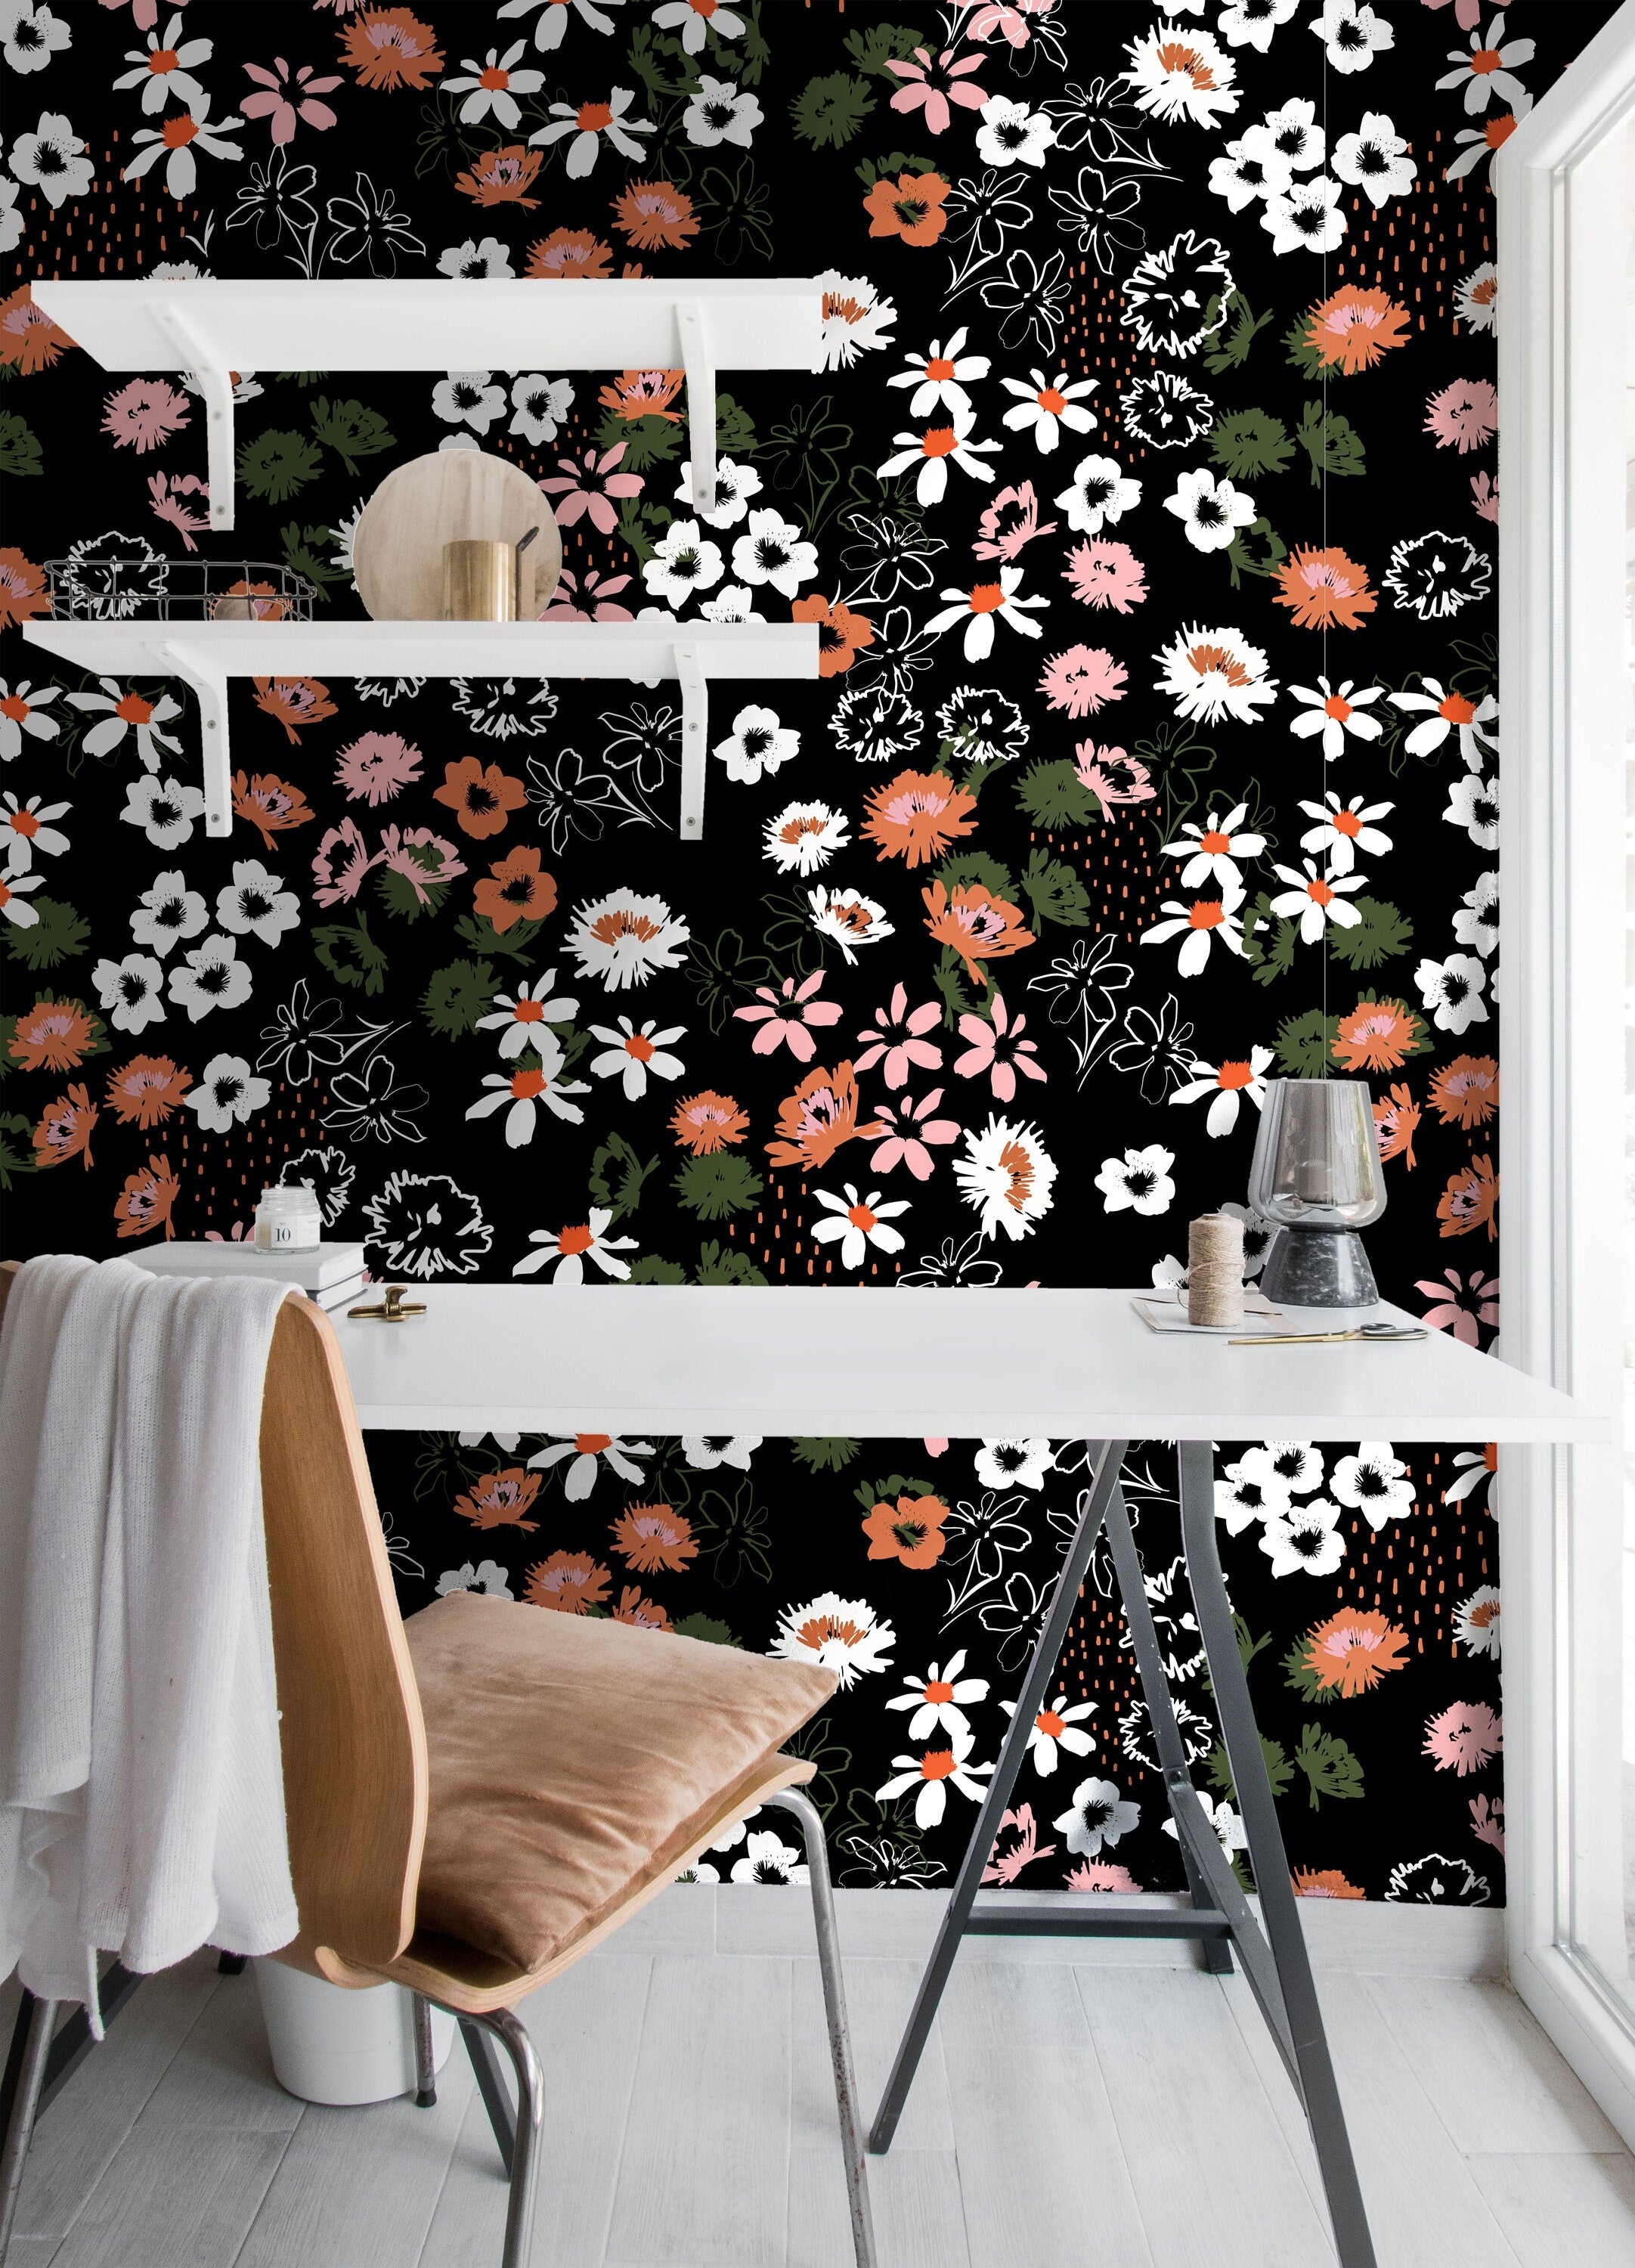 Wild Flower Floral Wall Decals